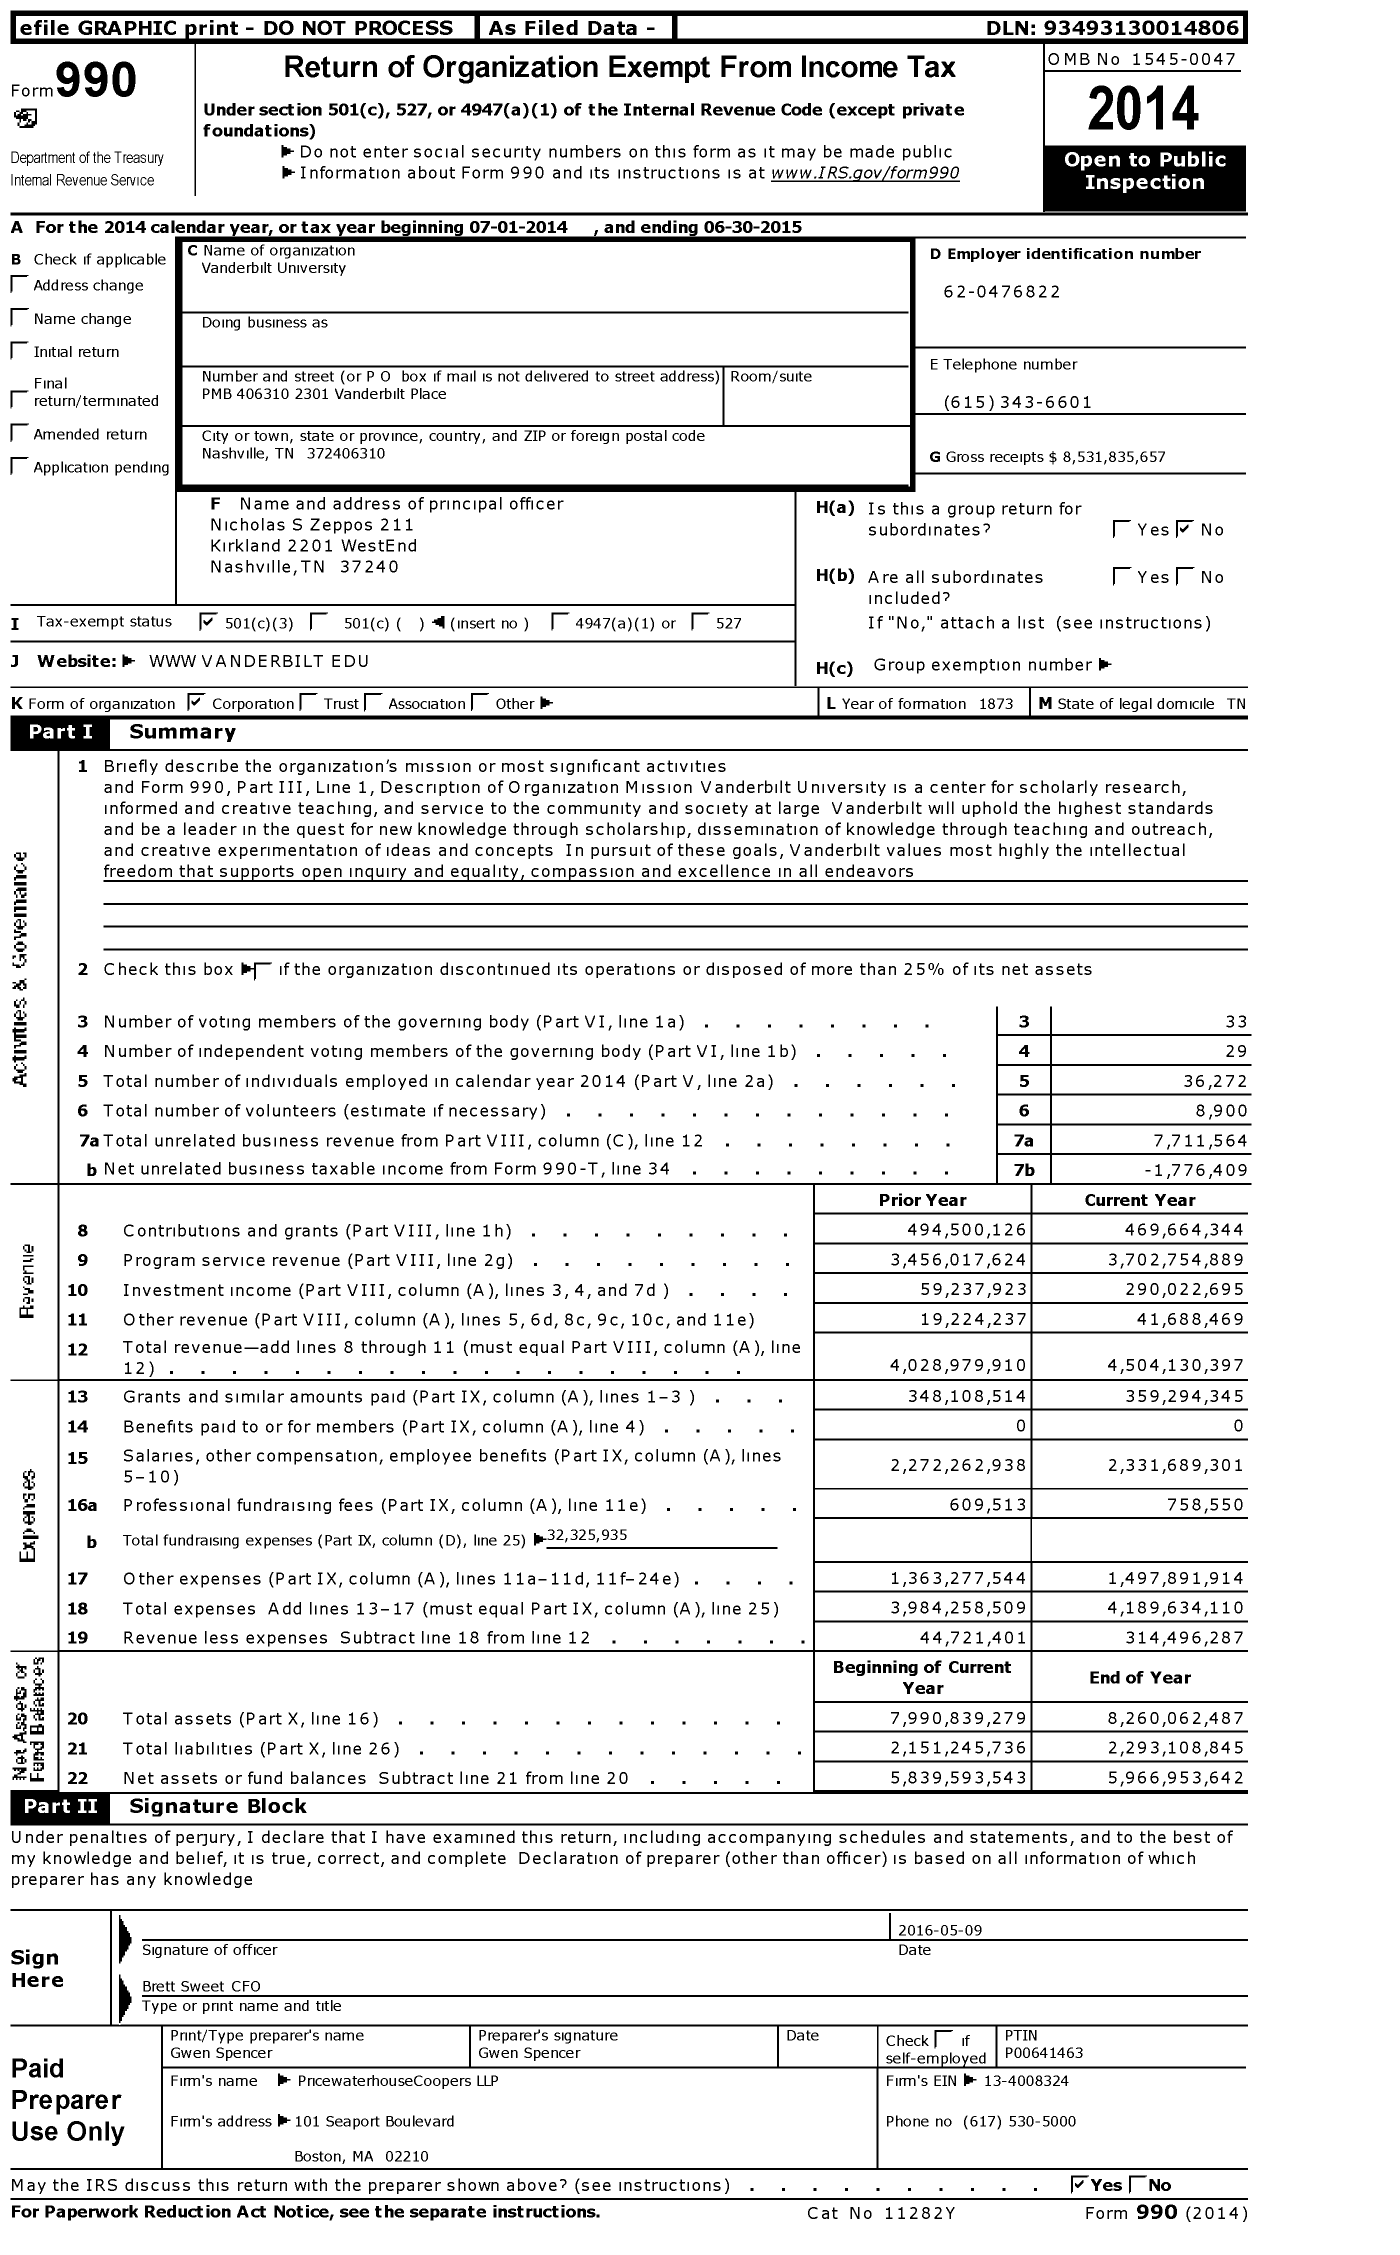 Image of first page of 2014 Form 990 for Vanderbilt University